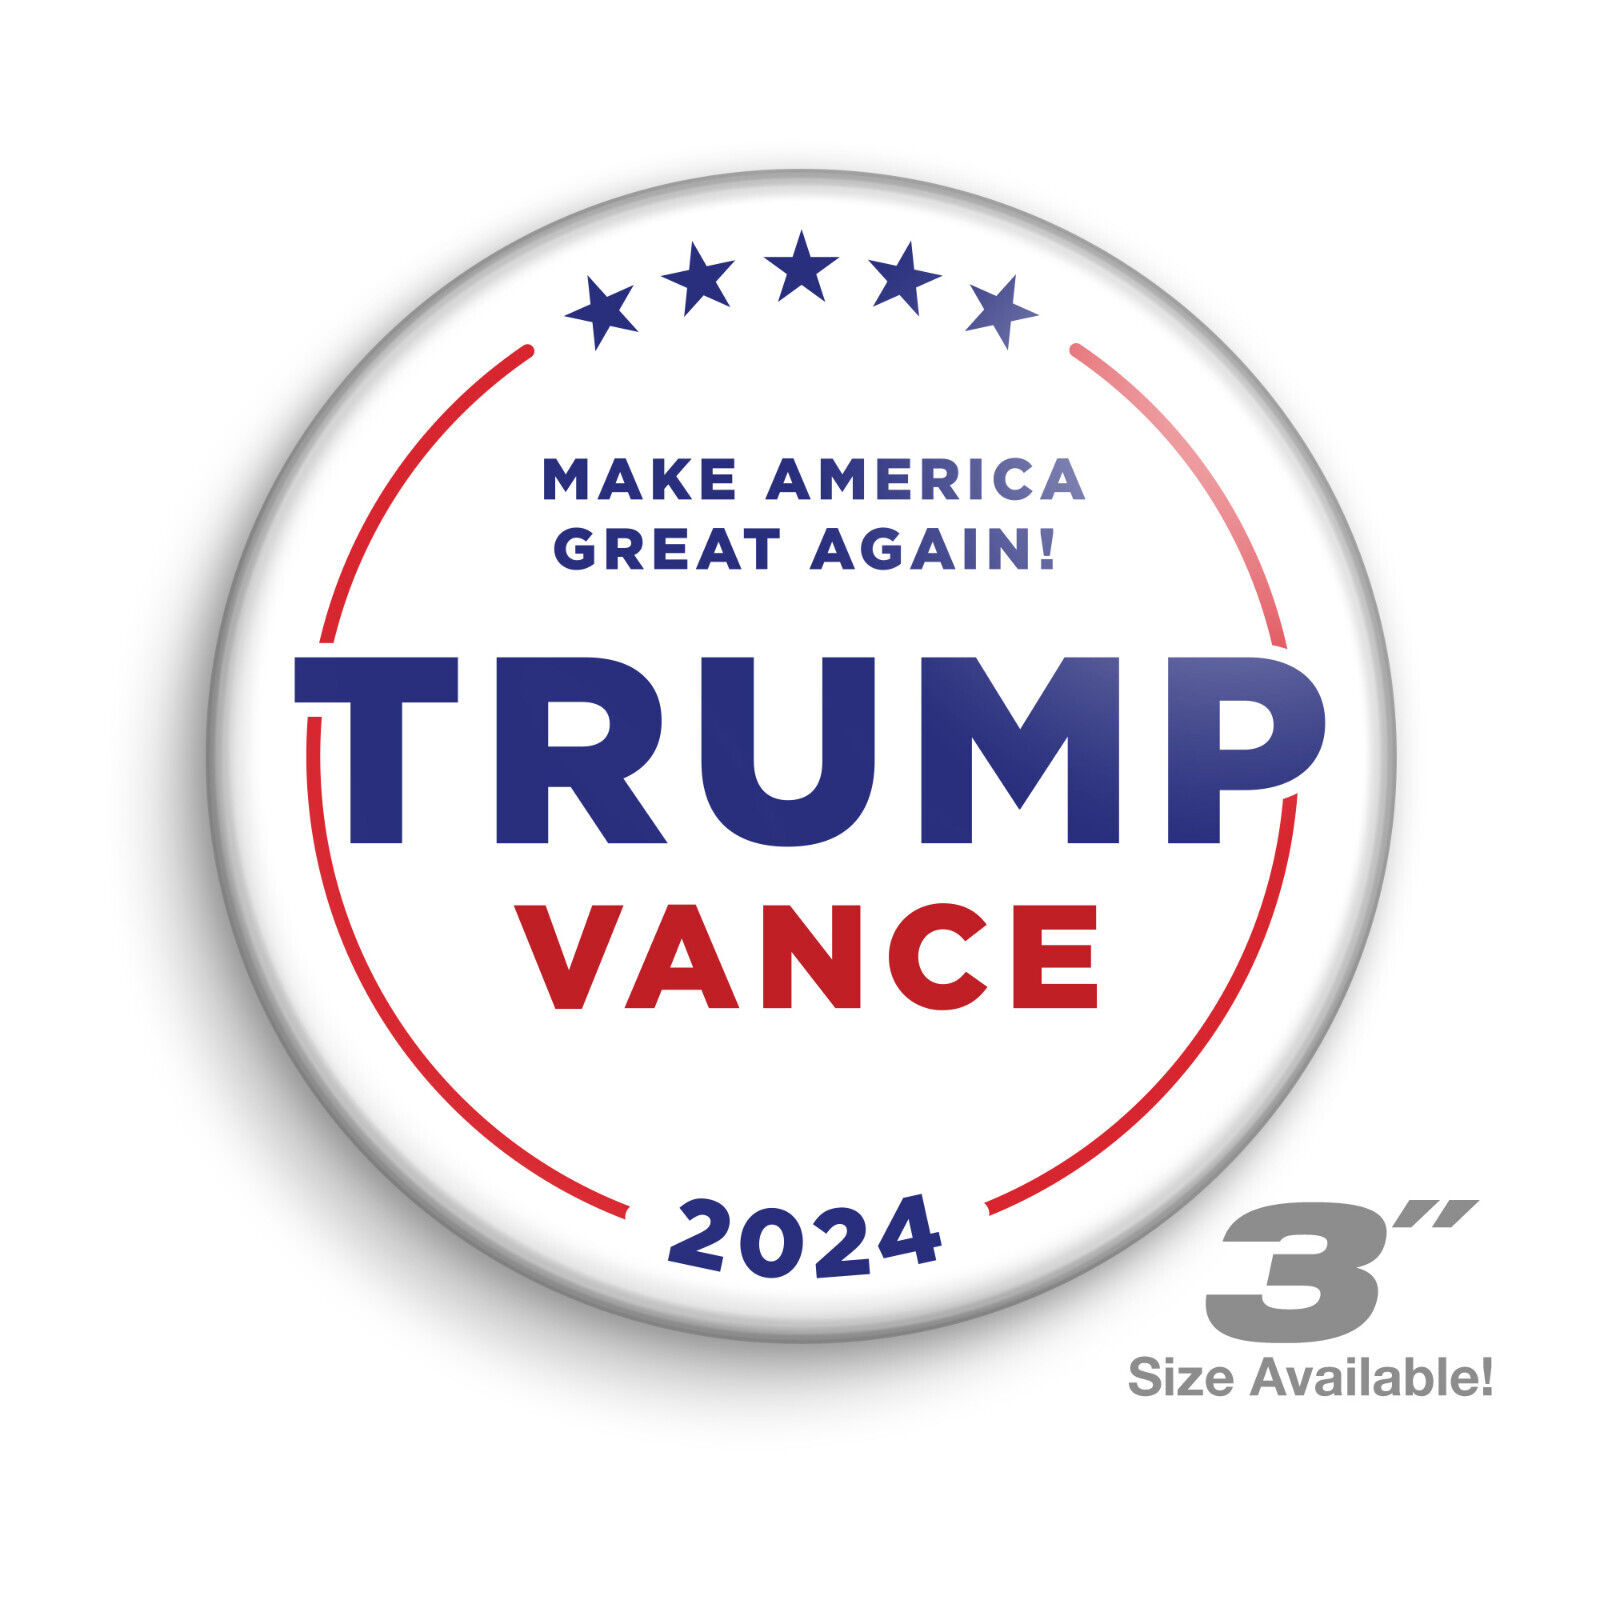 TRUMP VANCE 2024 | Vice President | Campaign Pins